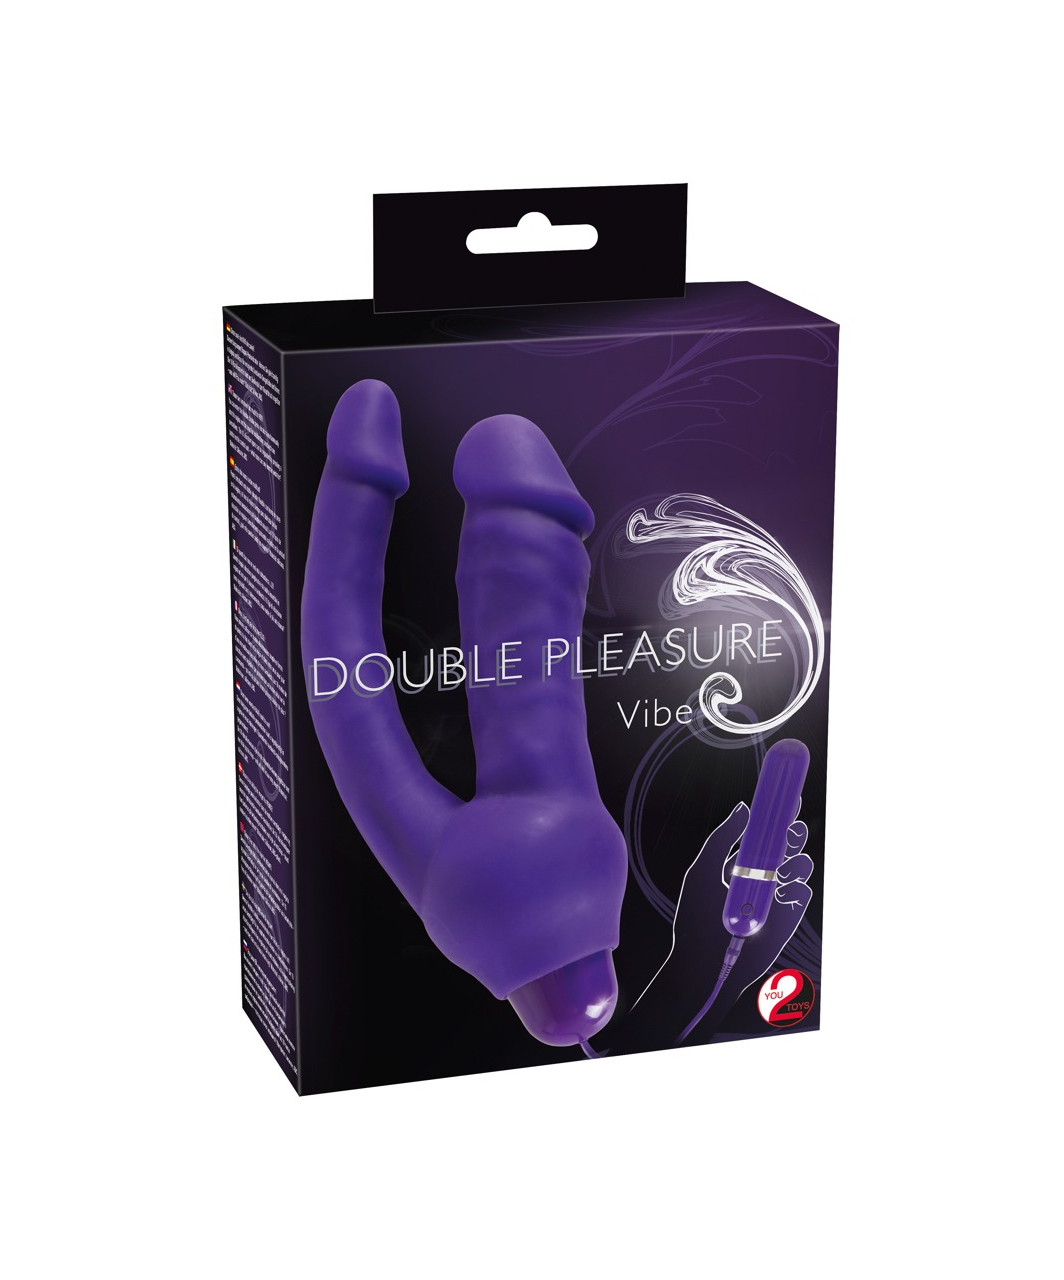 You2Toys Double Pleasure vibrators